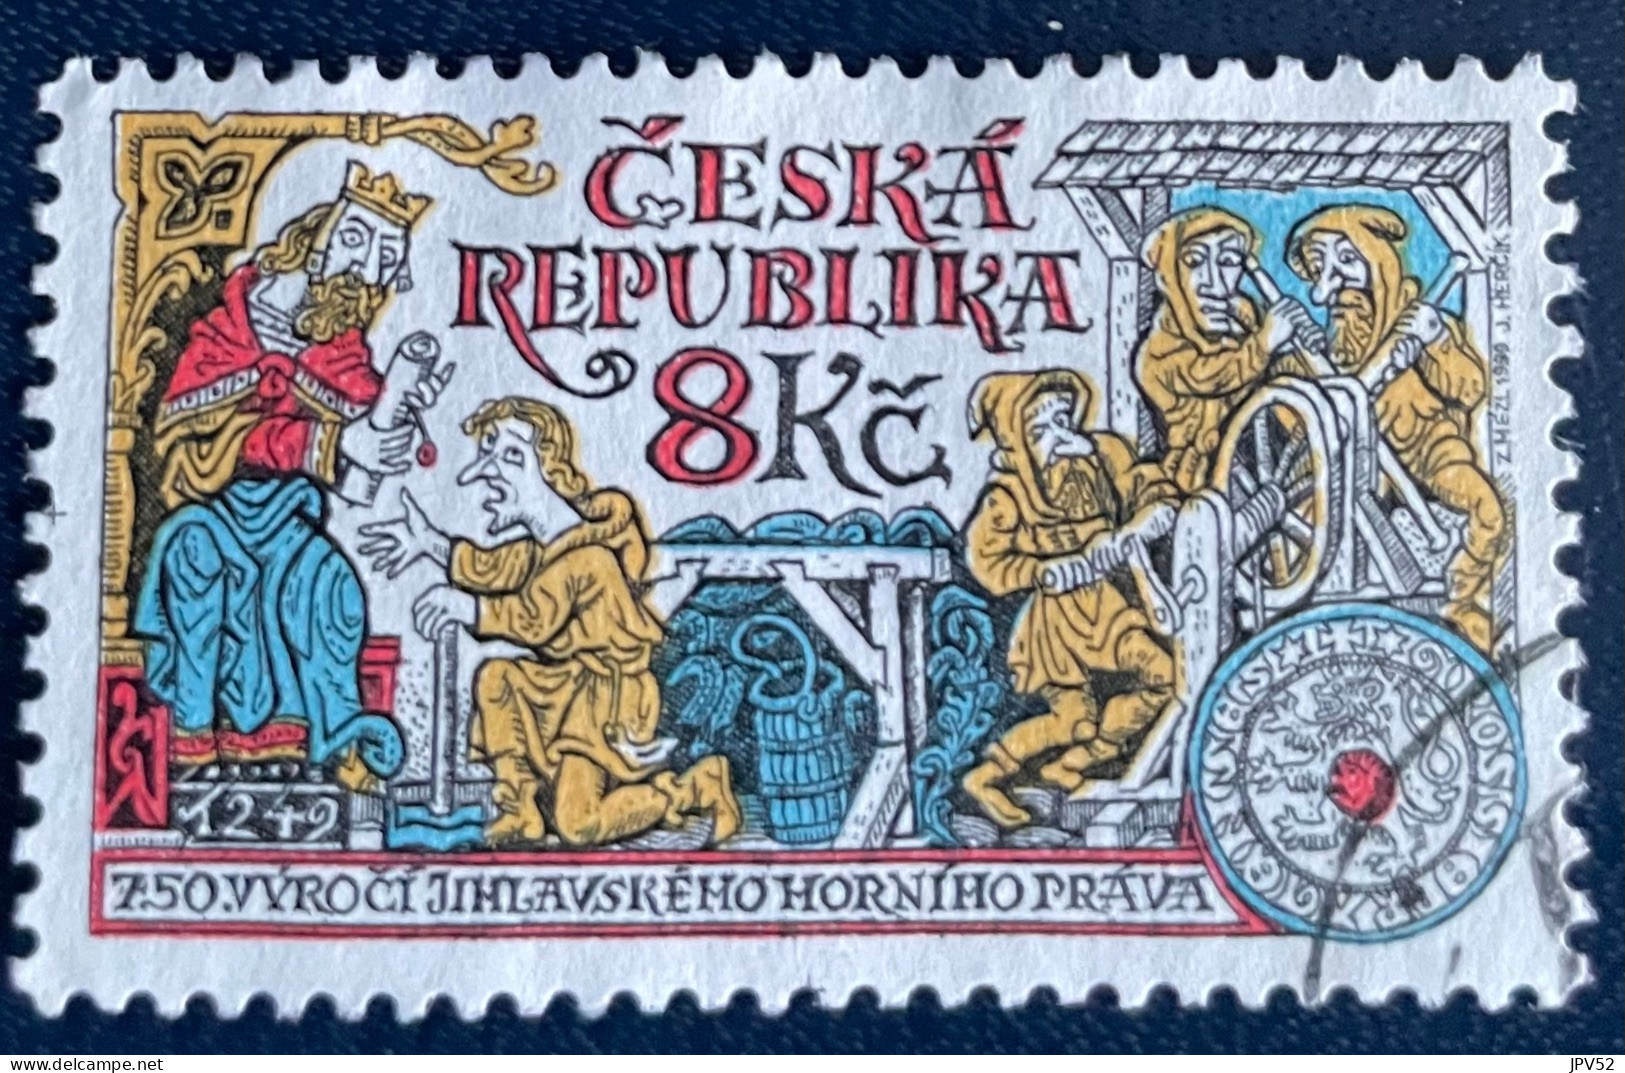 Ceska Republika - Tsjechië - C4/5 - 1999 - (°)used - Michel 223 - 750j Mijnbouwconcessie - Gebruikt